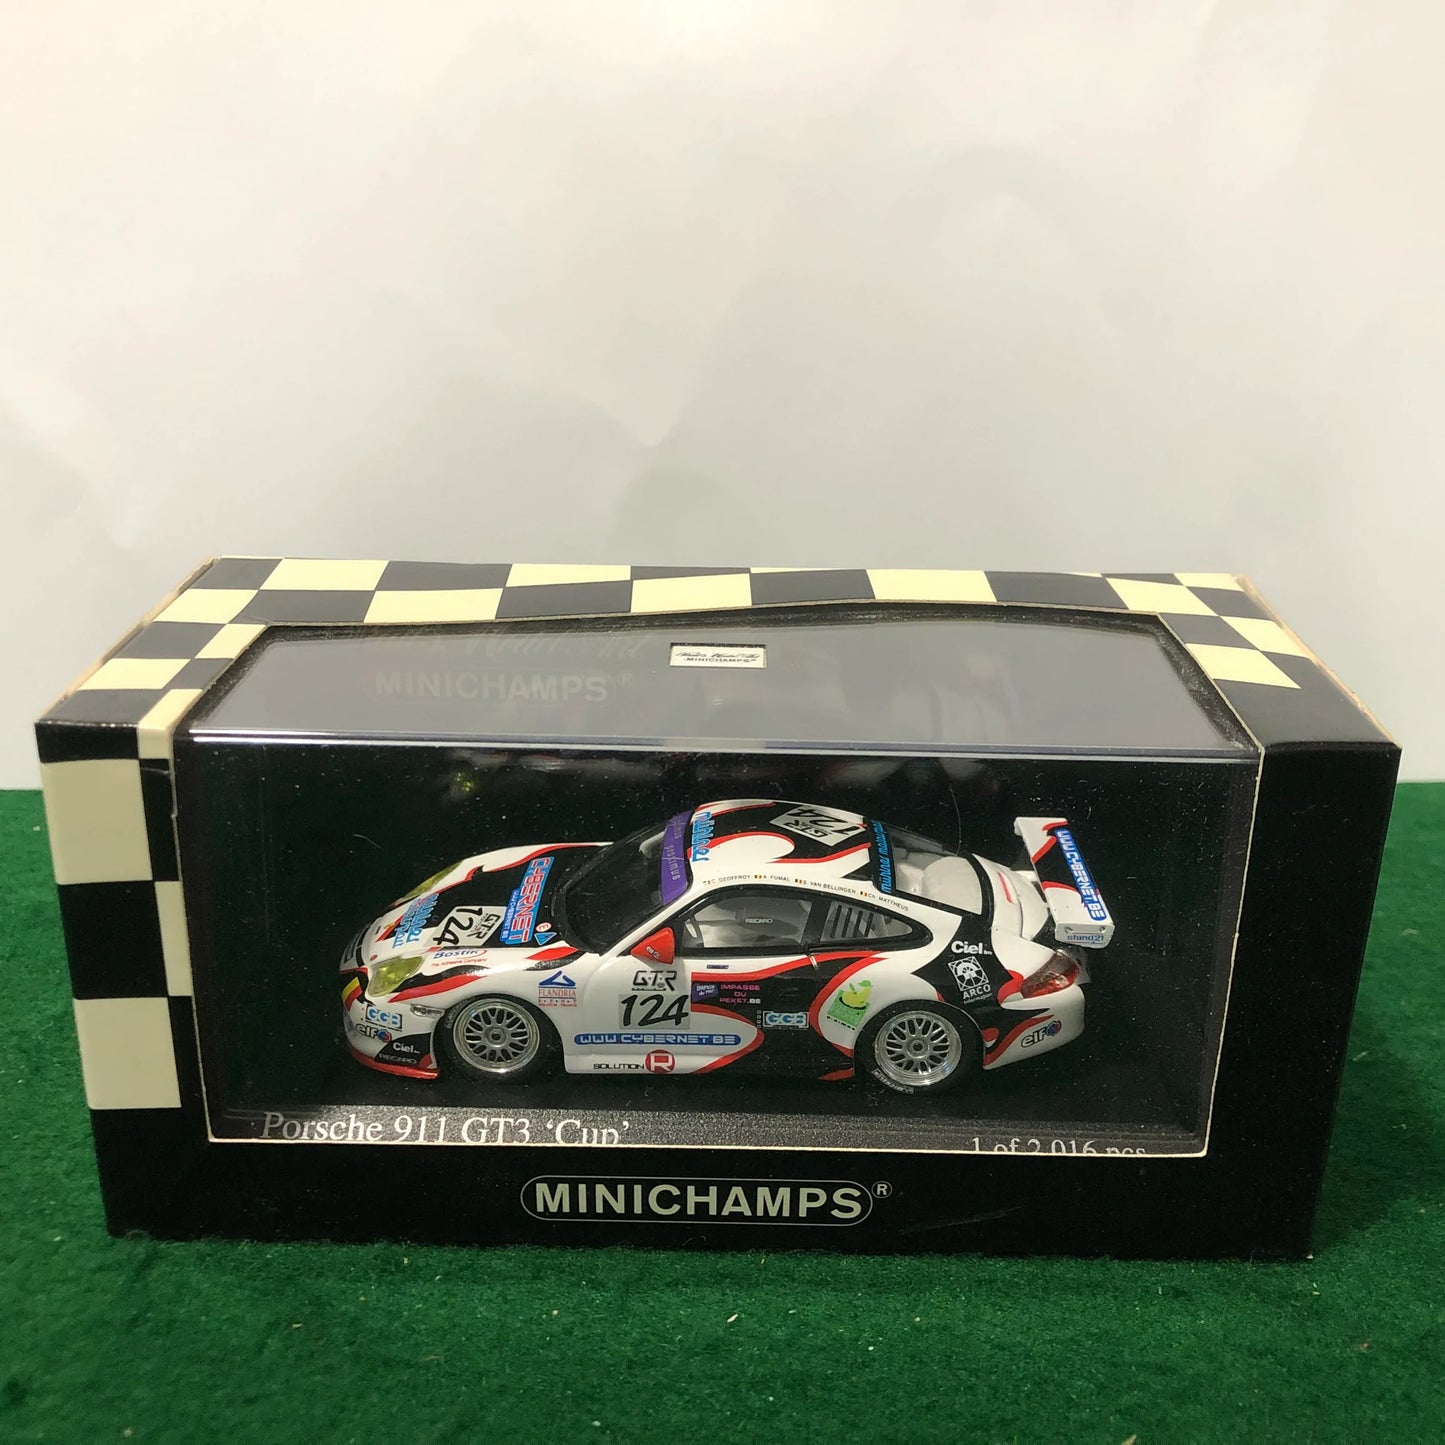 Minichamps 1:43 Porsche 911 GT3 Vanbellingen / Fumald / Geoffroy Class Winner #124 Team Muhlner Motorsport 24h SPA 2005 400056224